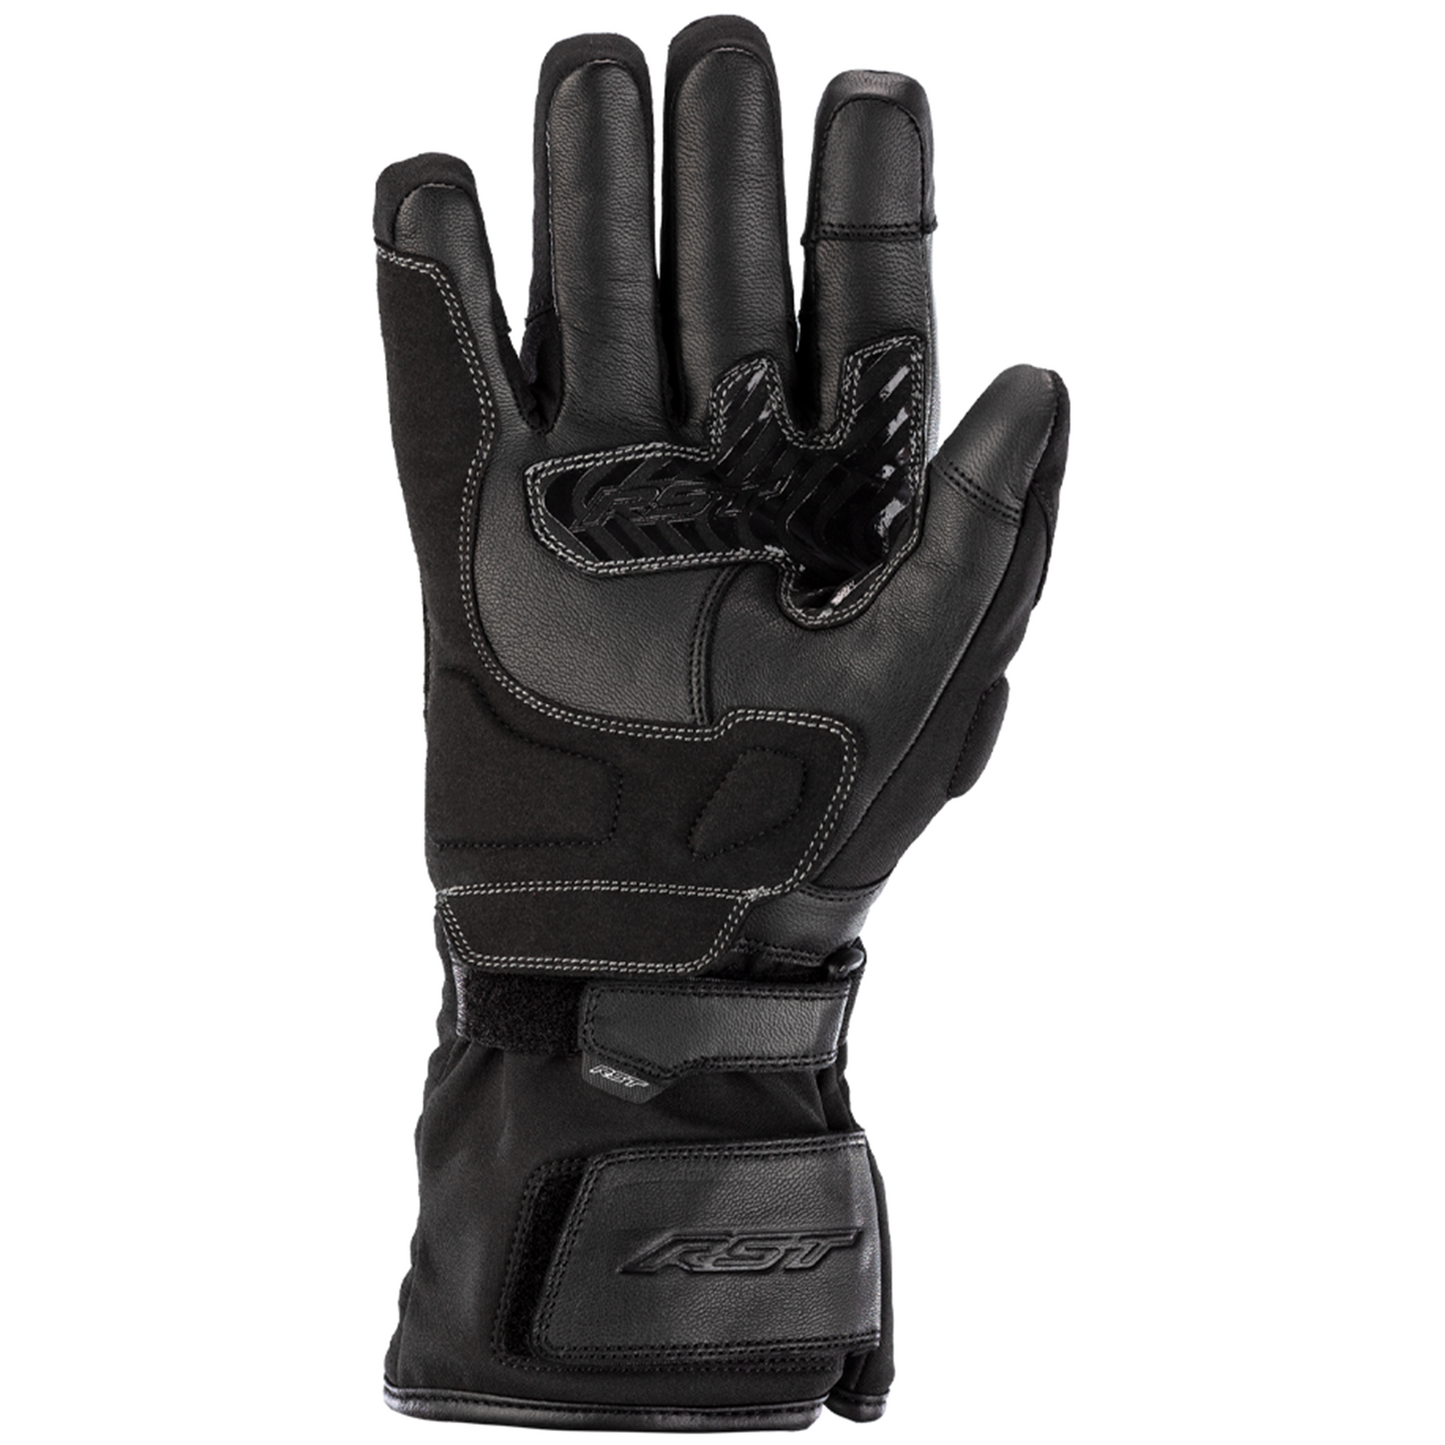 RST Storm 2 Textile (CE) Waterproof Gloves - Black (2682)